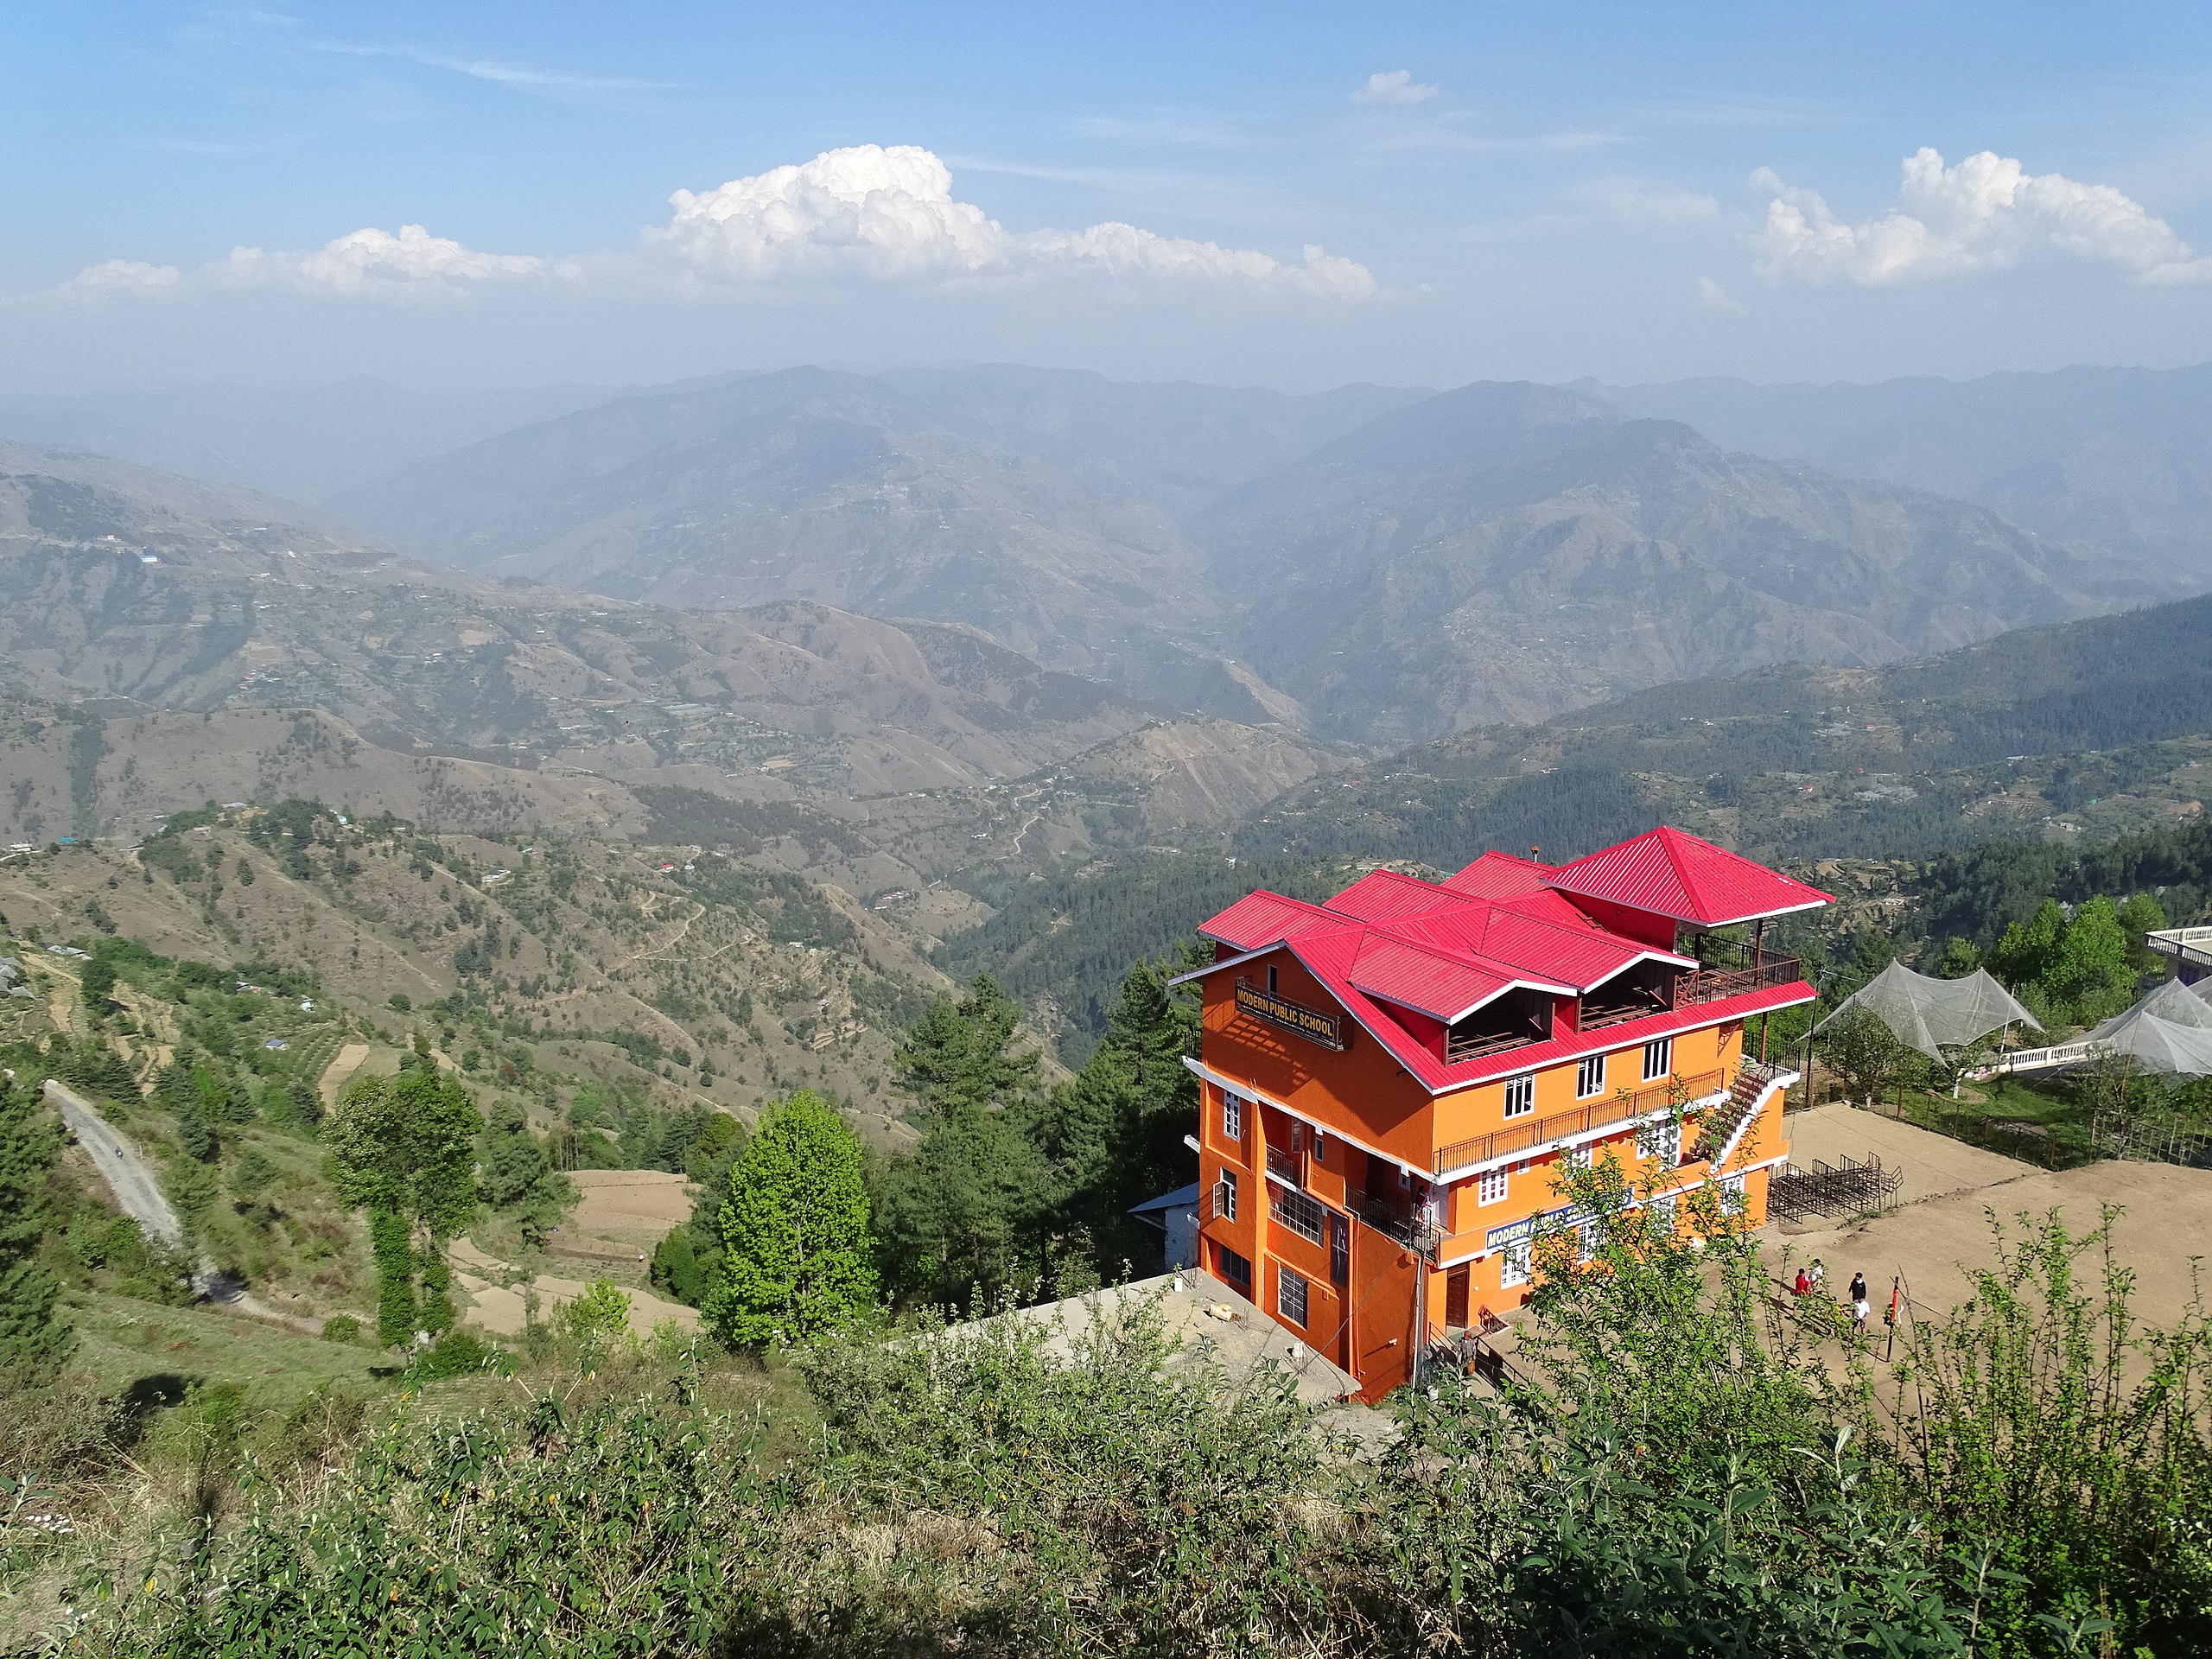 File:View of Countryside around Shimla - Shimla - Himachal Pradesh - India - 03 (26510561081).jpg - Wikimedia Commons